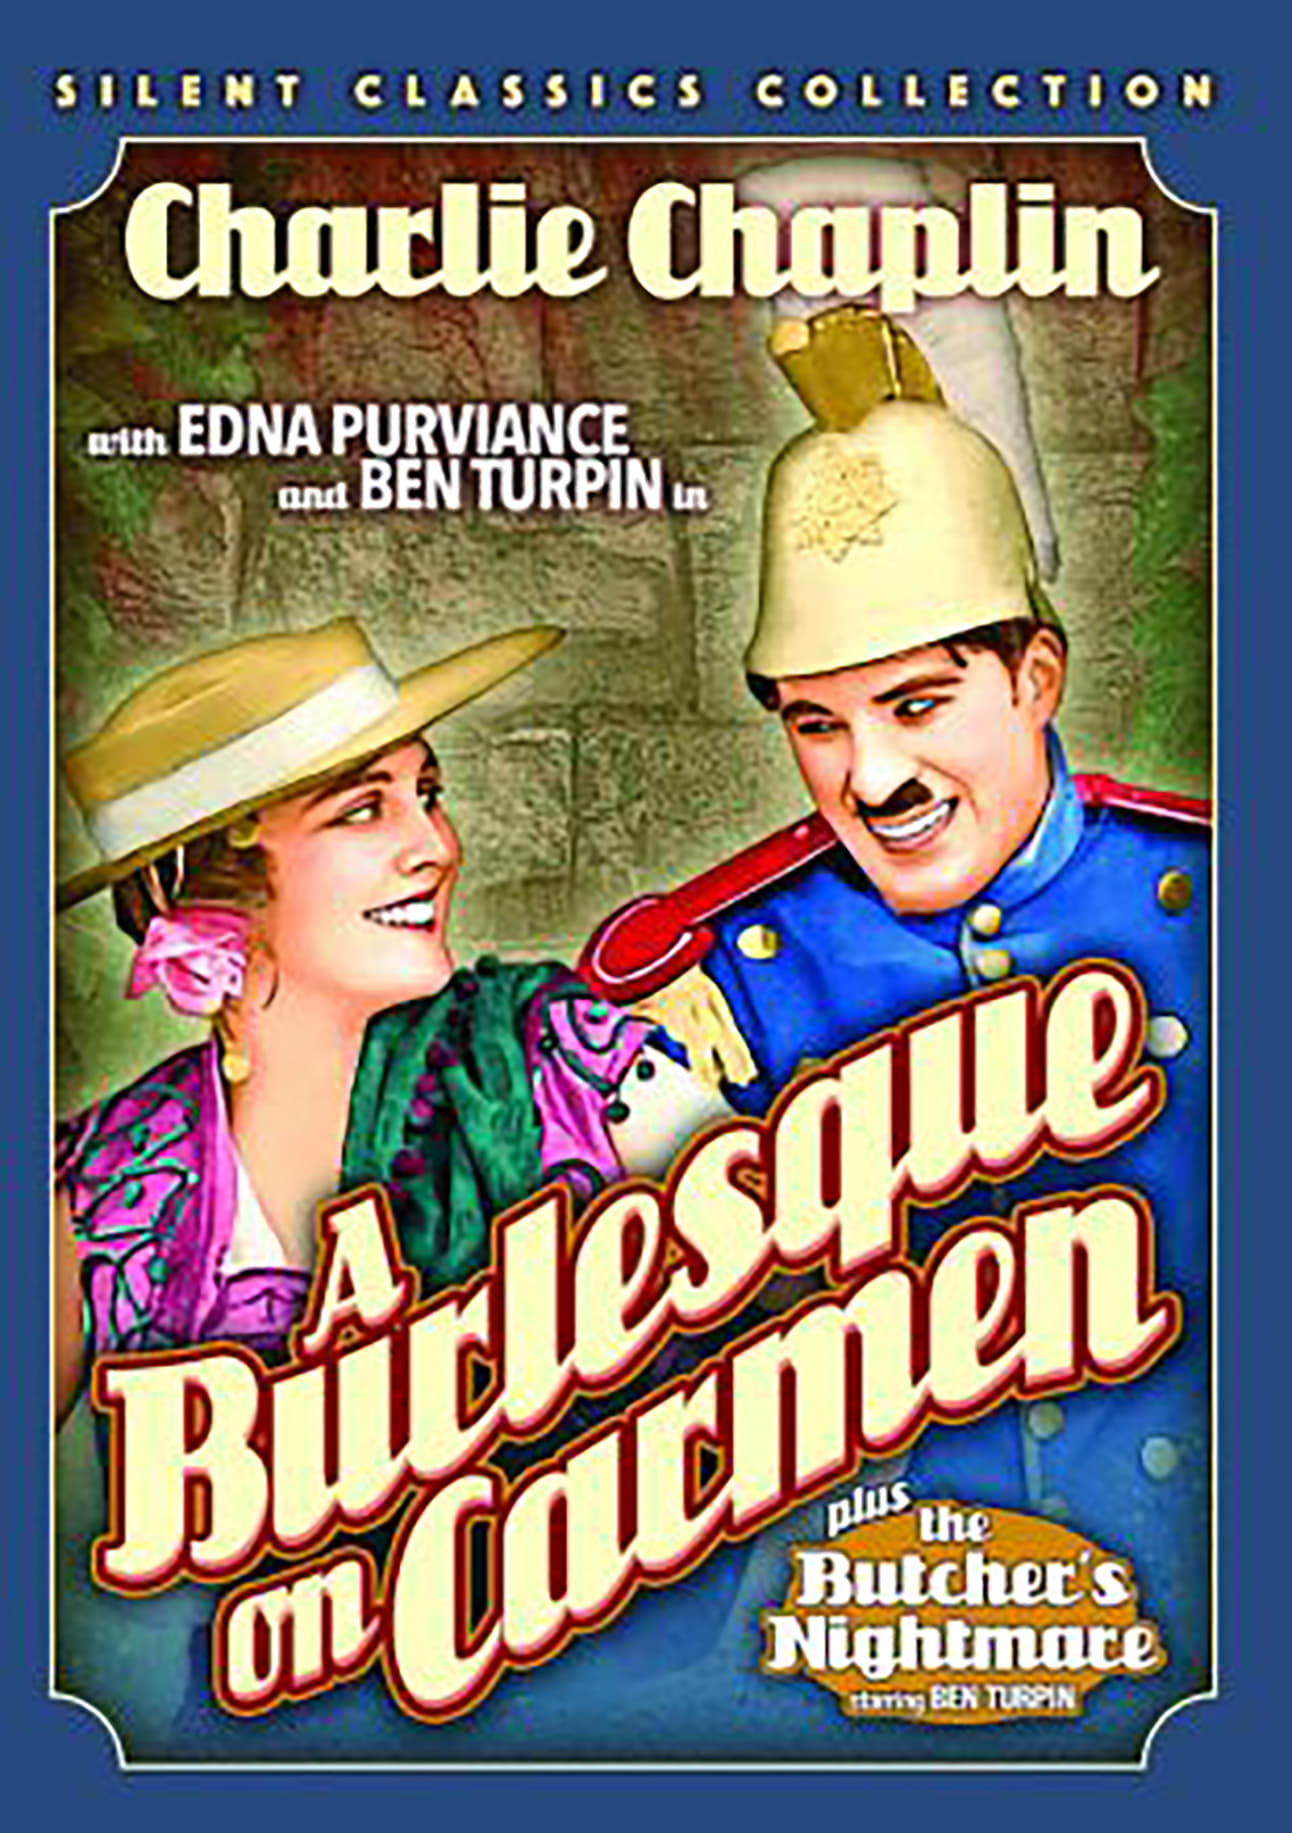 A Burlesque on the Opera Carmen